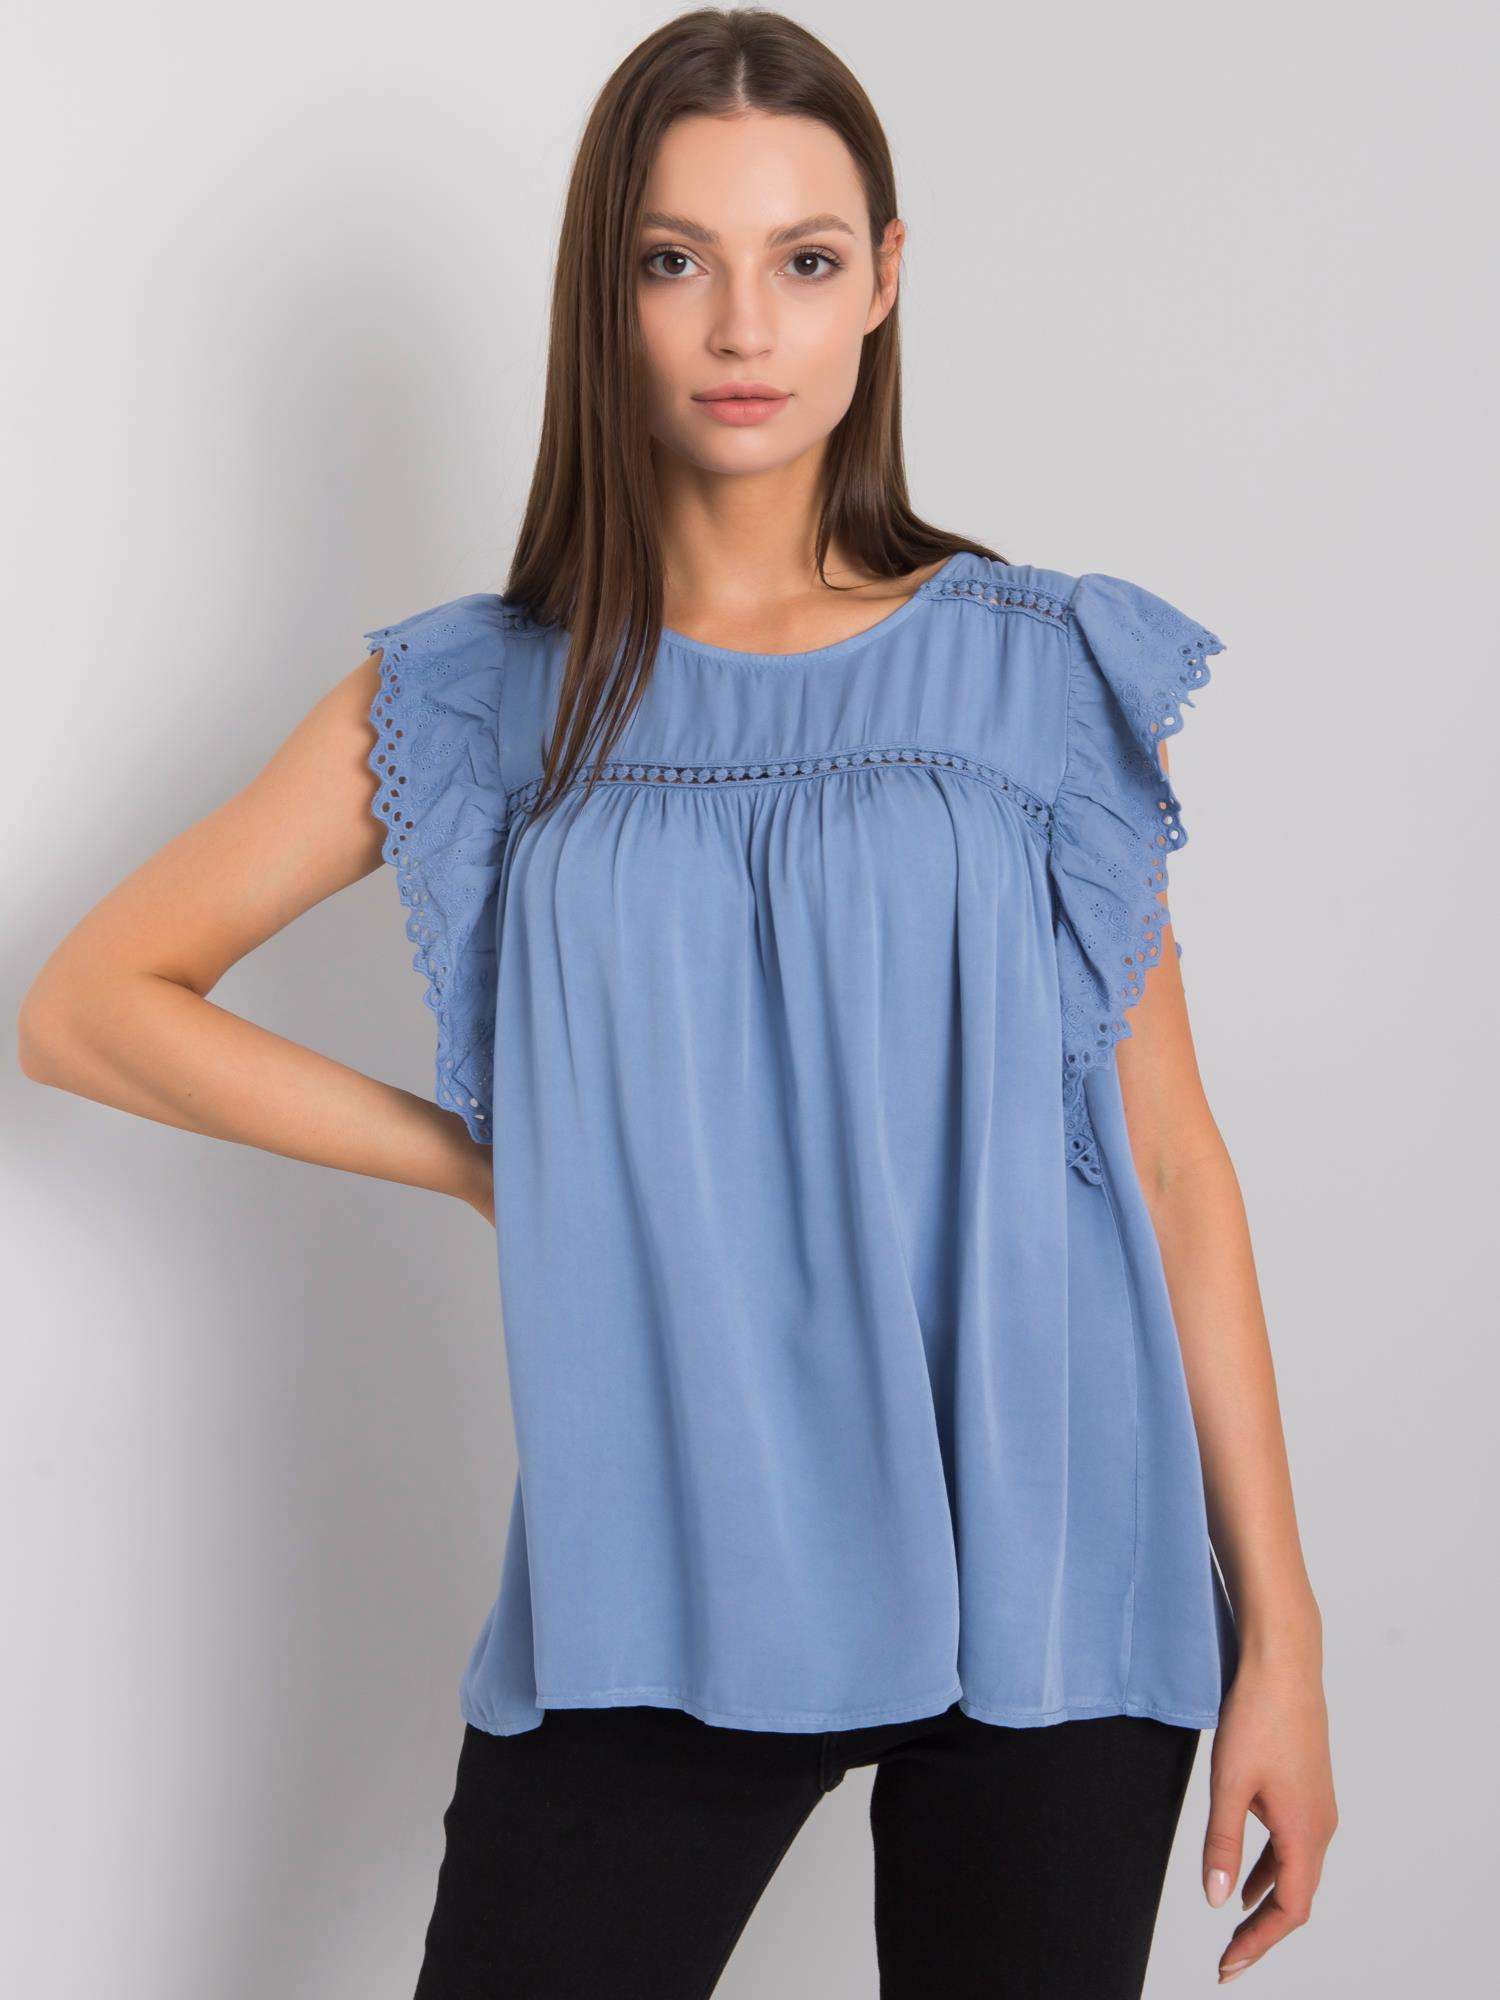 Blue blouse Yups awd0467. R13